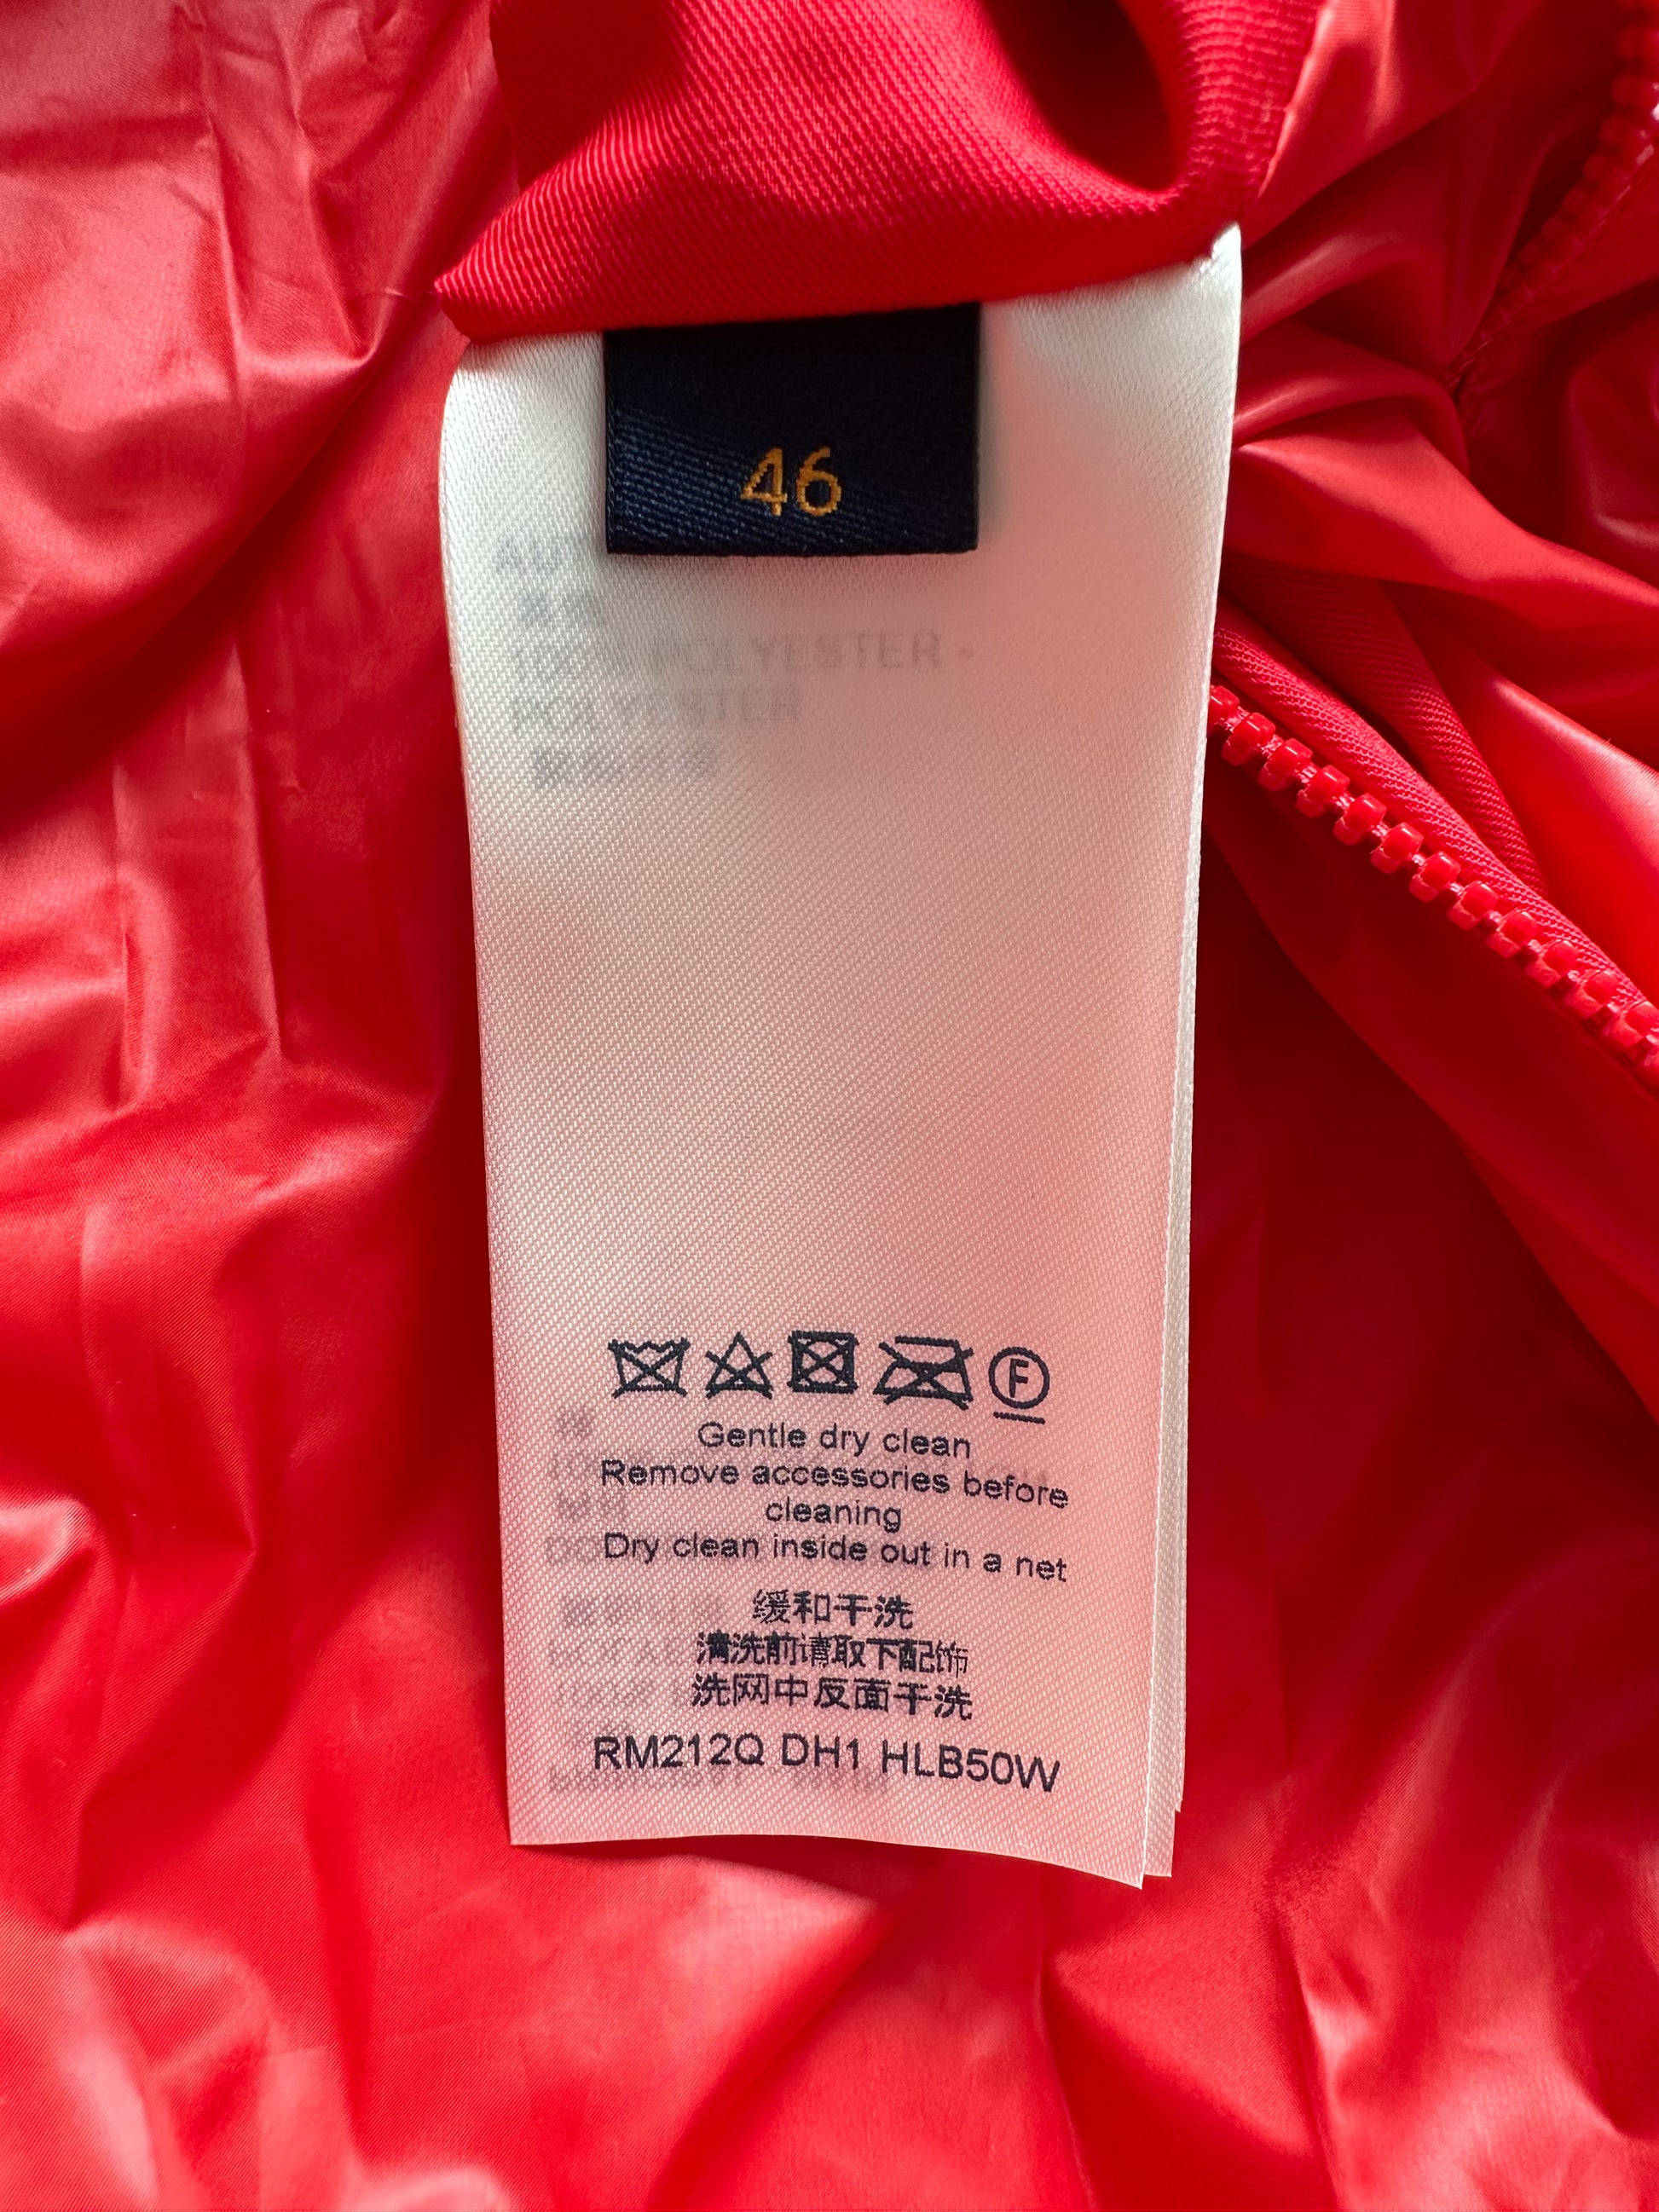 Louis Vuitton red Mirror Puffer Jacket